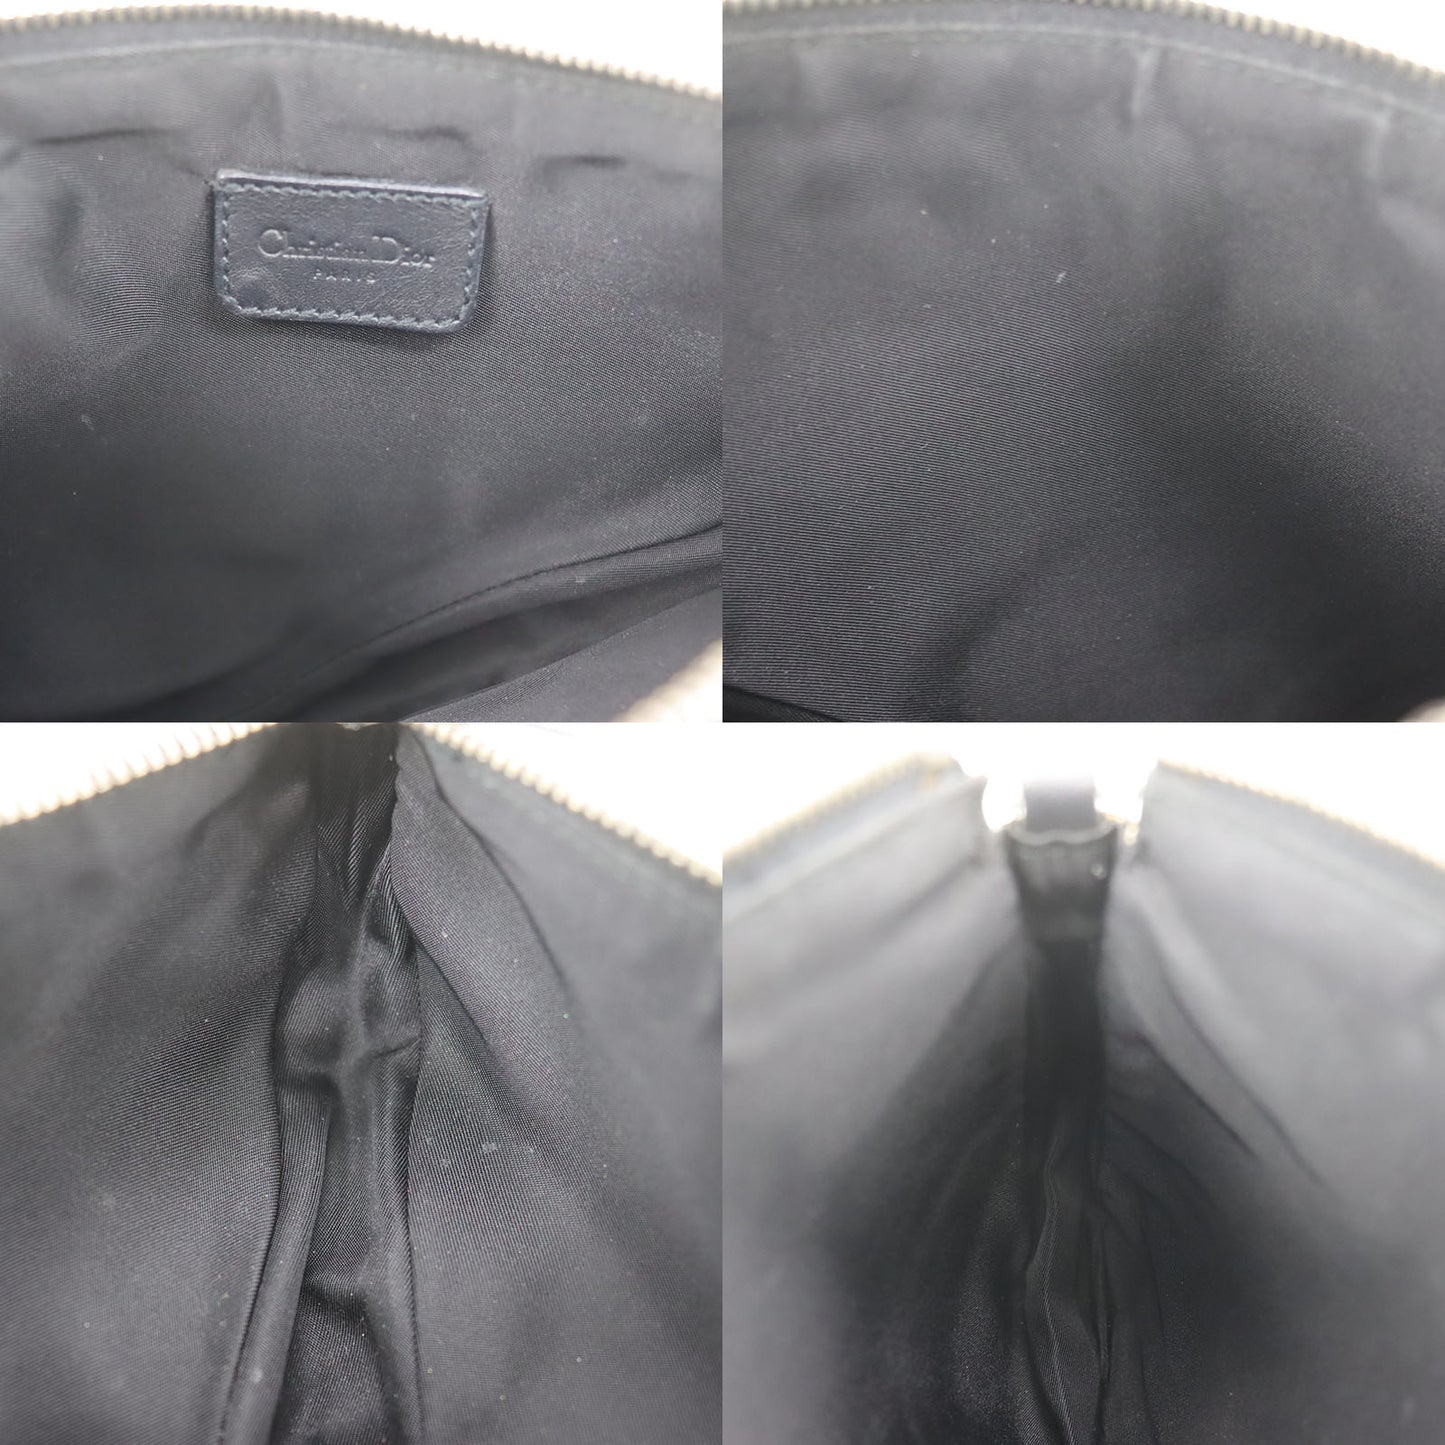 Christian Dior Trotter Saddle Bag Handbag Black Canvas #CN281